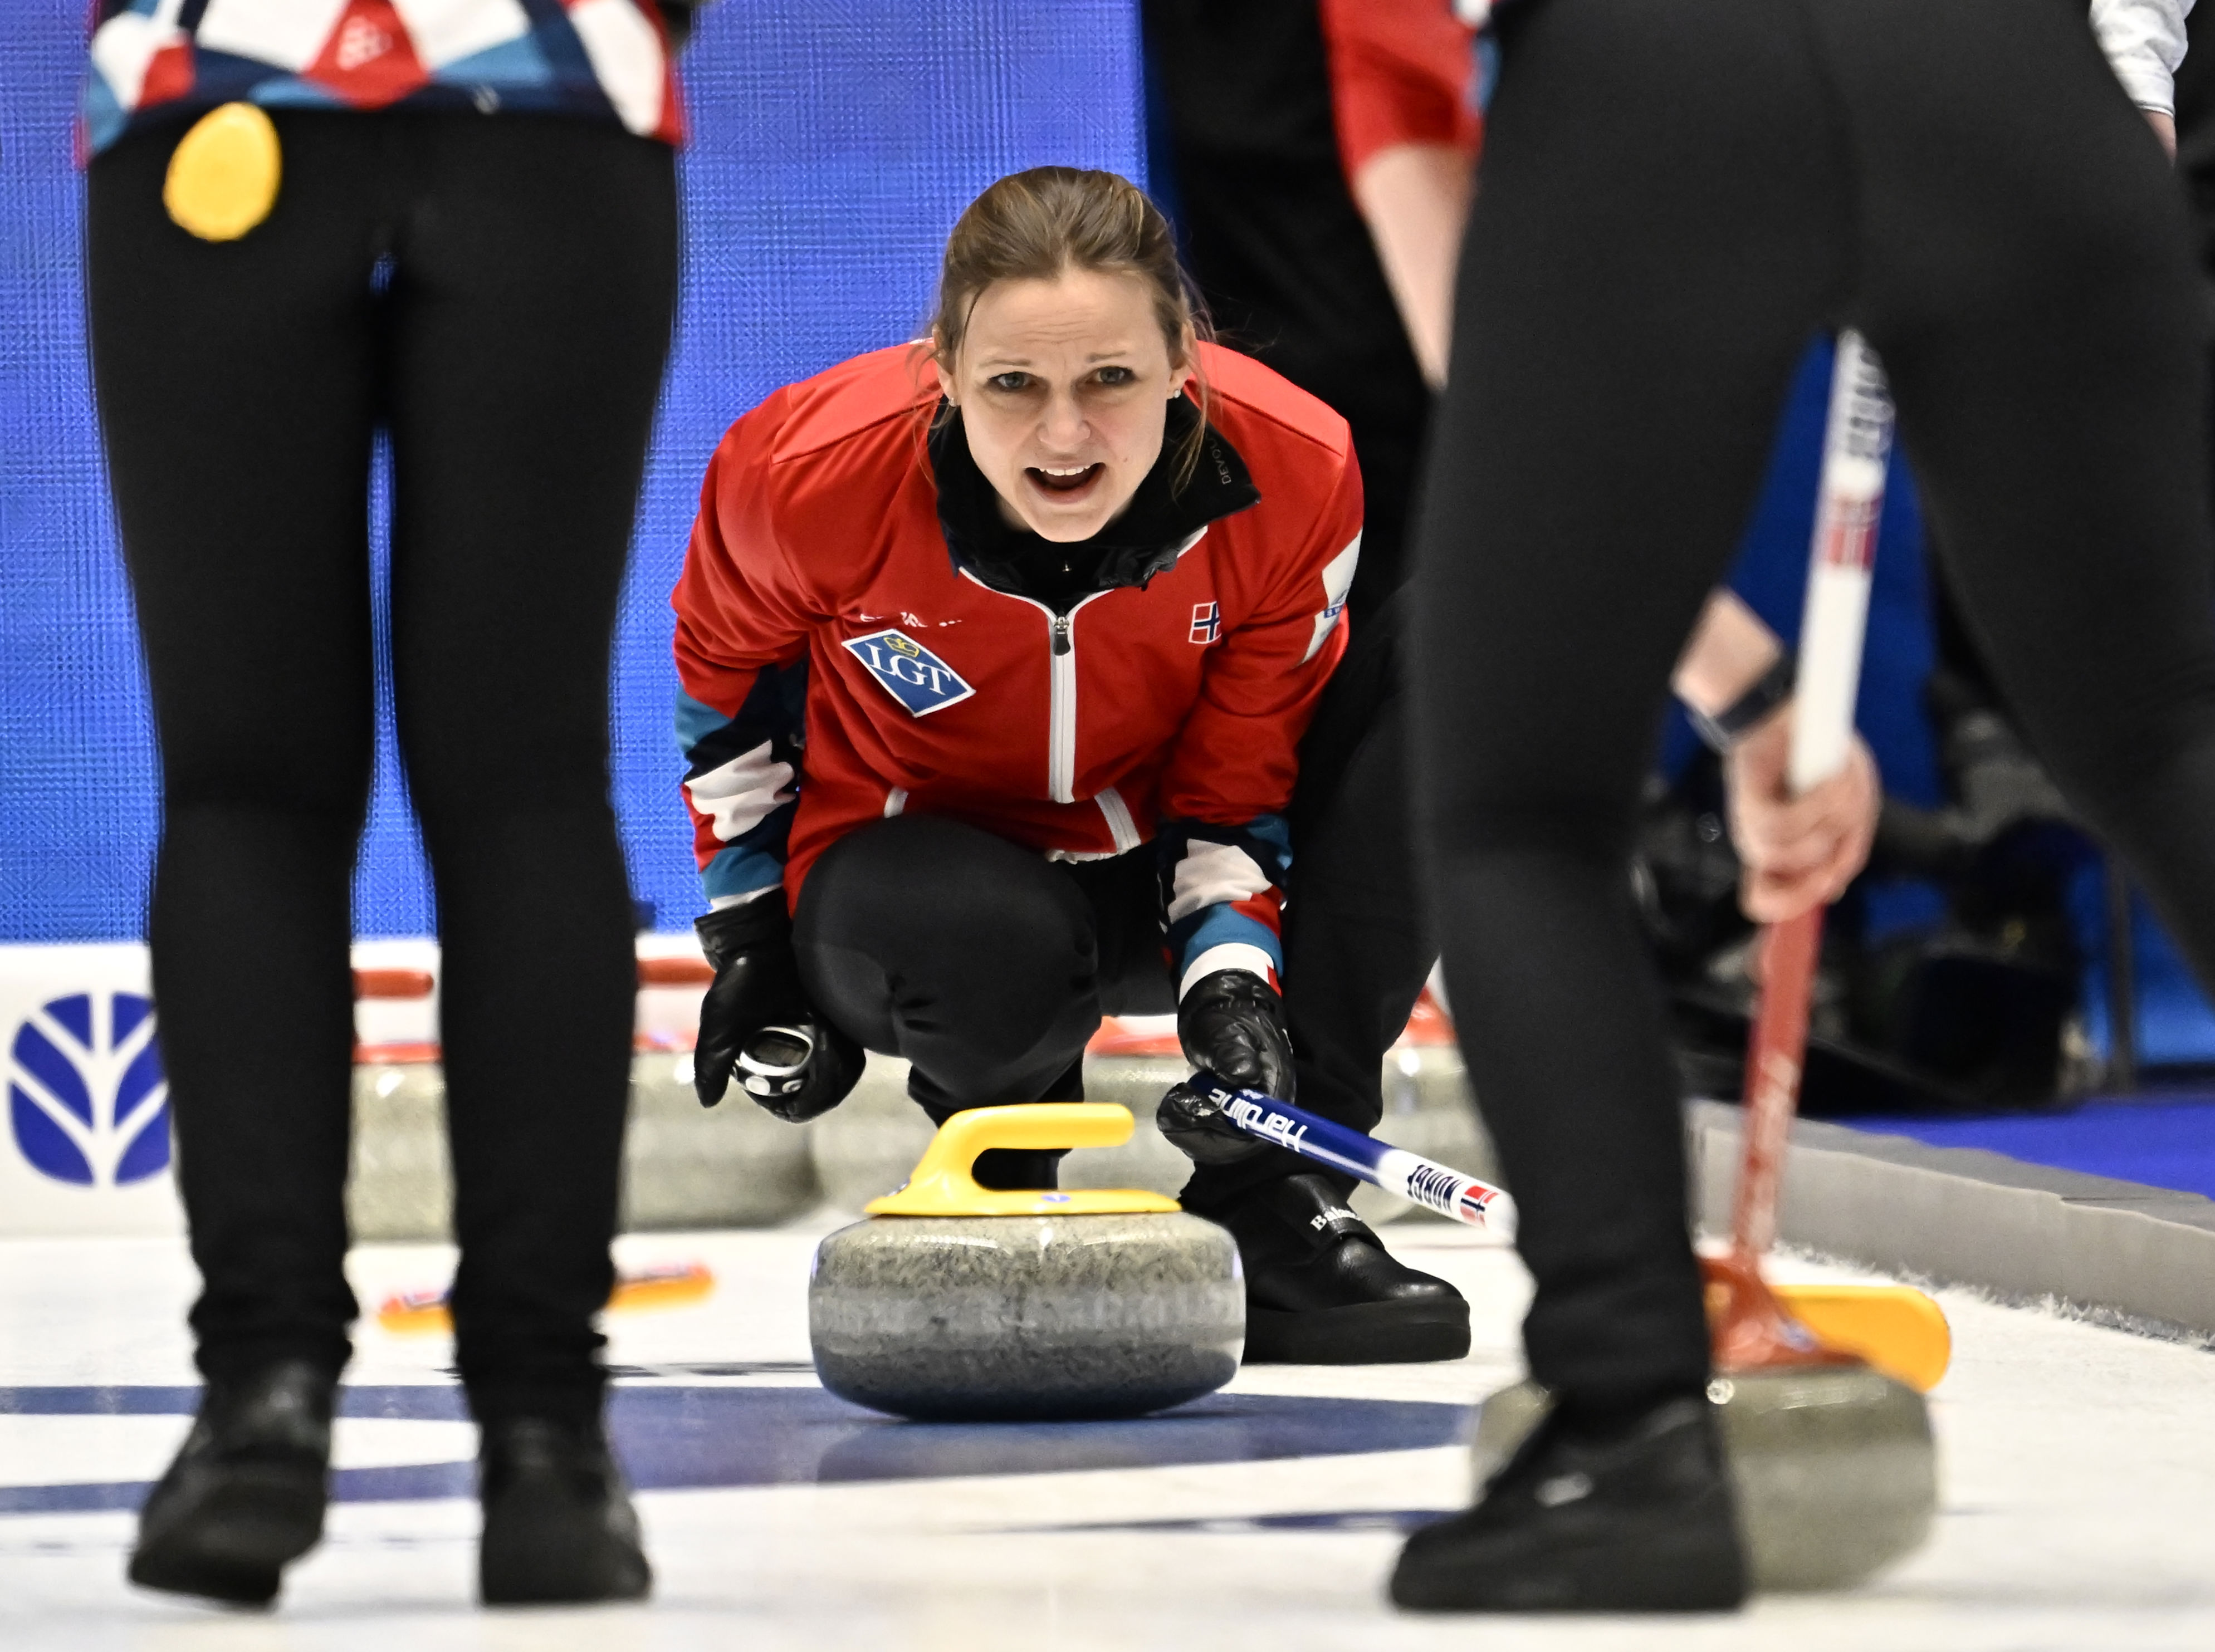 tung dag for norges curlingkvinner med to tap